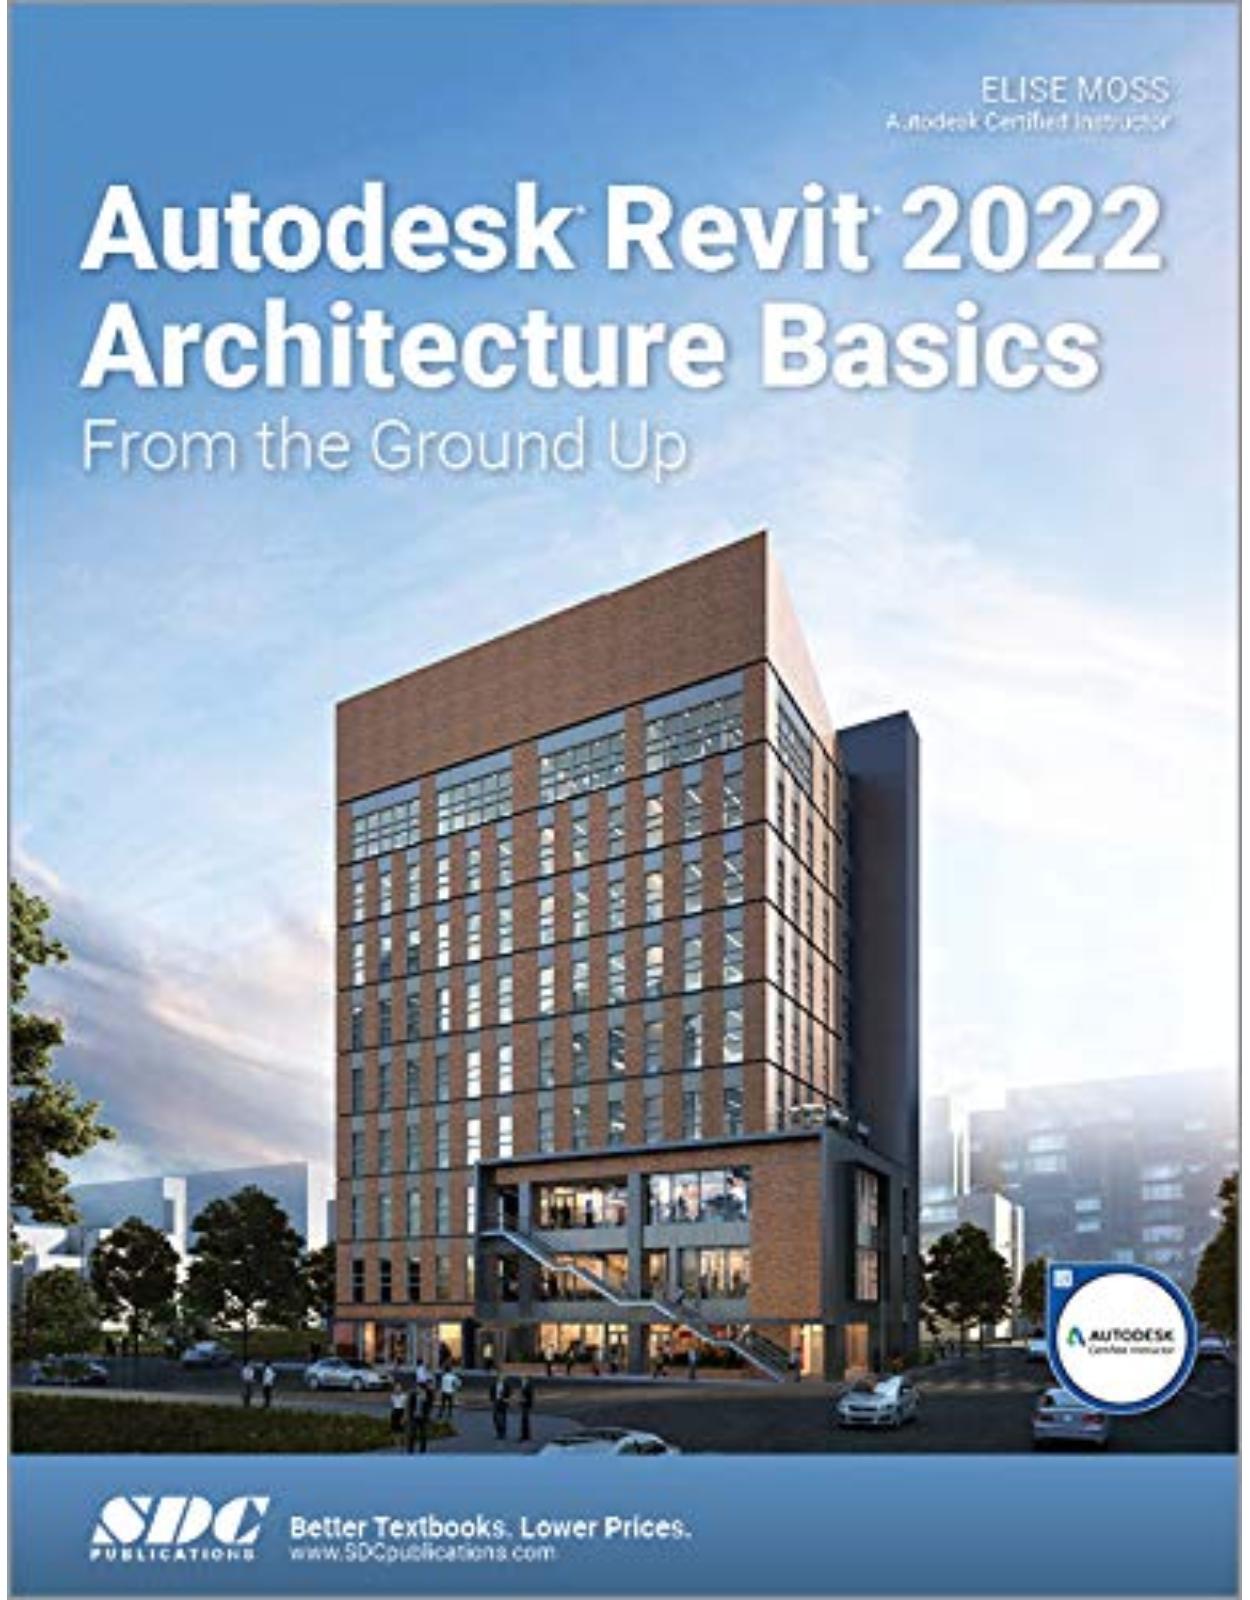 Autodesk Revit 2022 Architecture Basics: From the Ground Up